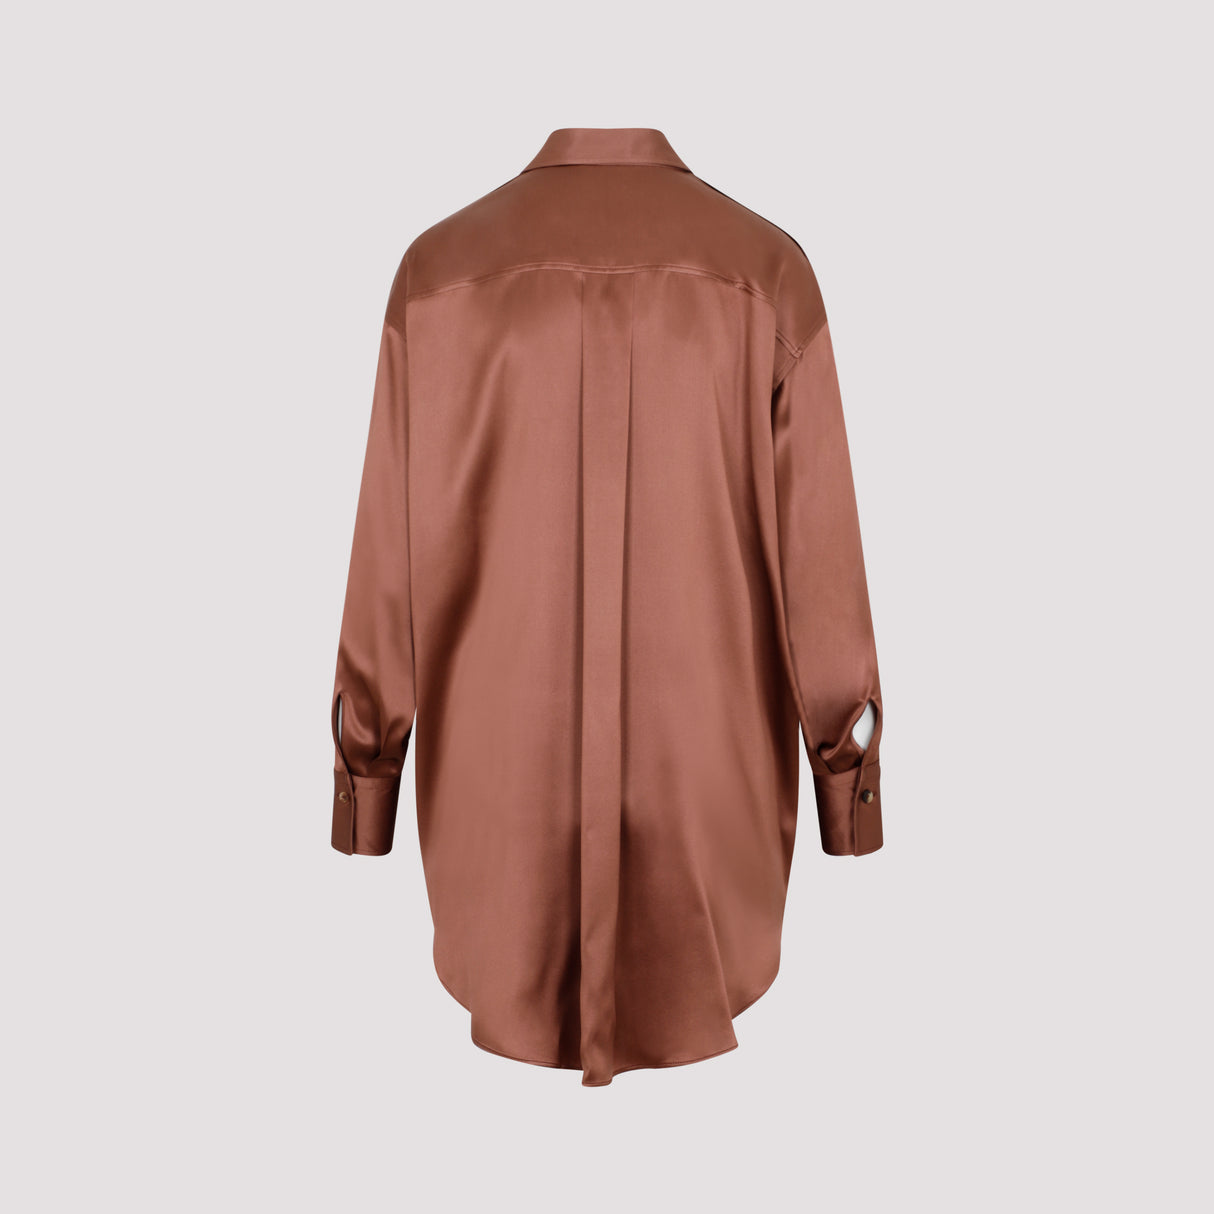 BRUNELLO CUCINELLI Luxurious Brown Silk Shirt for Women - FW22 Collection